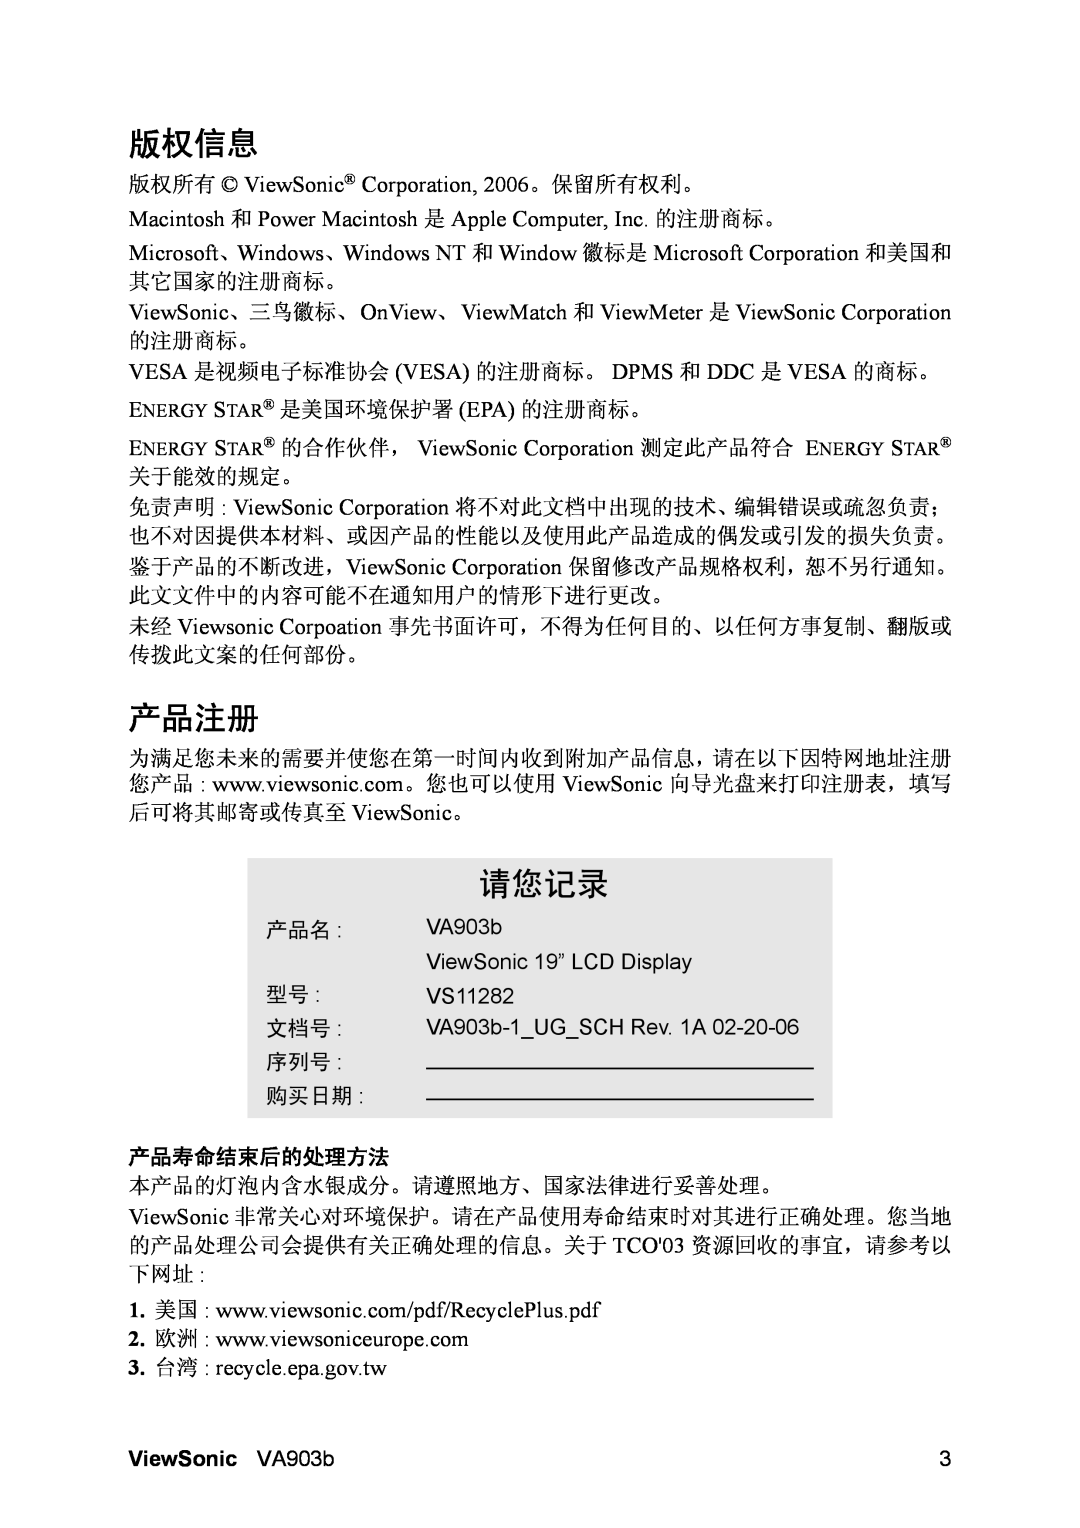 ViewSonic VA903B manual 版权信息, 产品注册, 请您记录, 3.台湾 recycle.epa.gov.tw, 产品寿命结束后的处理方法, ViewSonic VA903b 